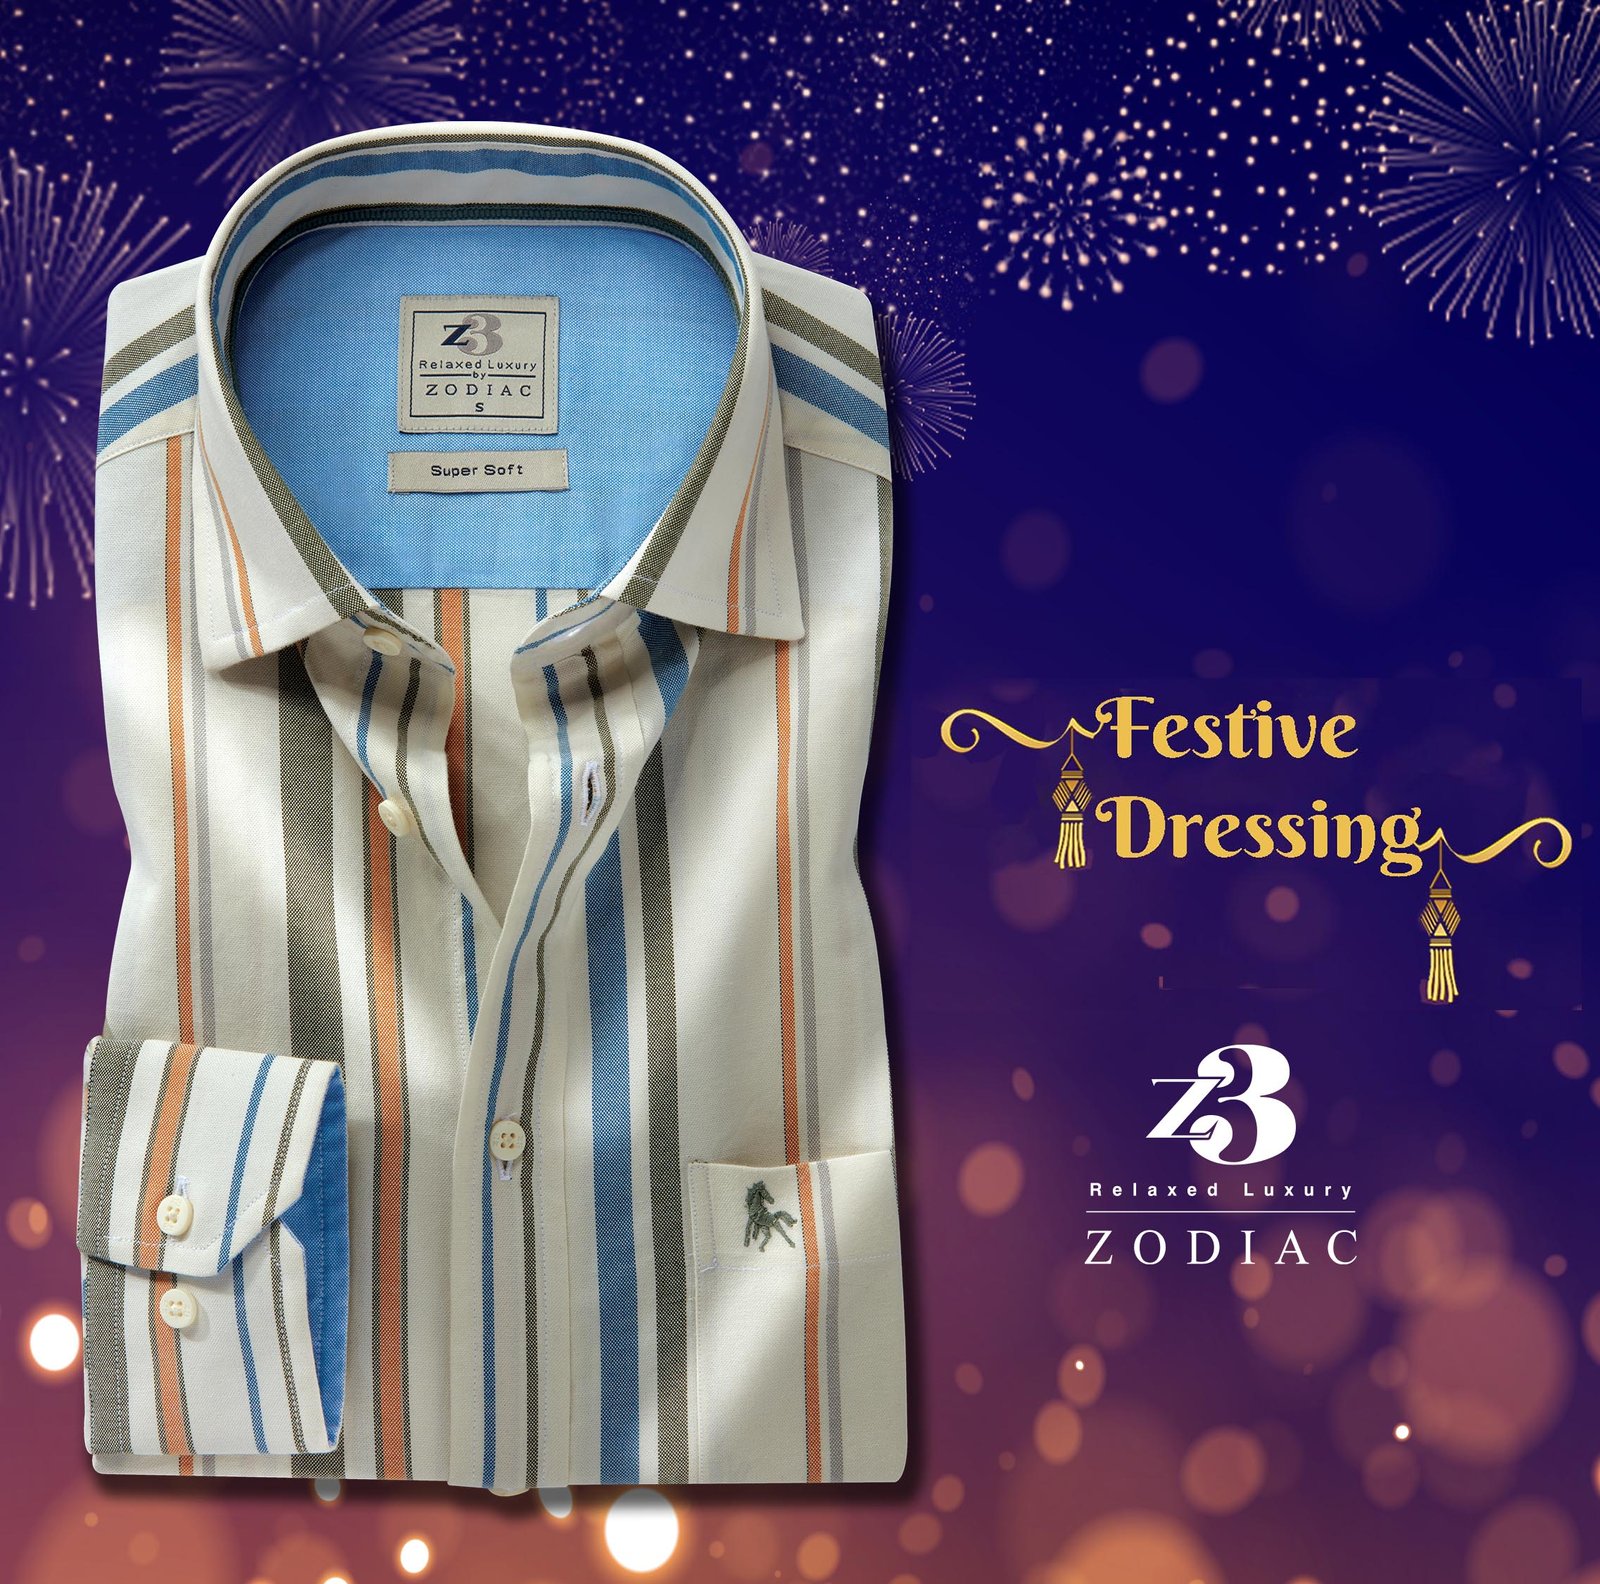 The House of ZODIAC Presents Festive Dressing 2022